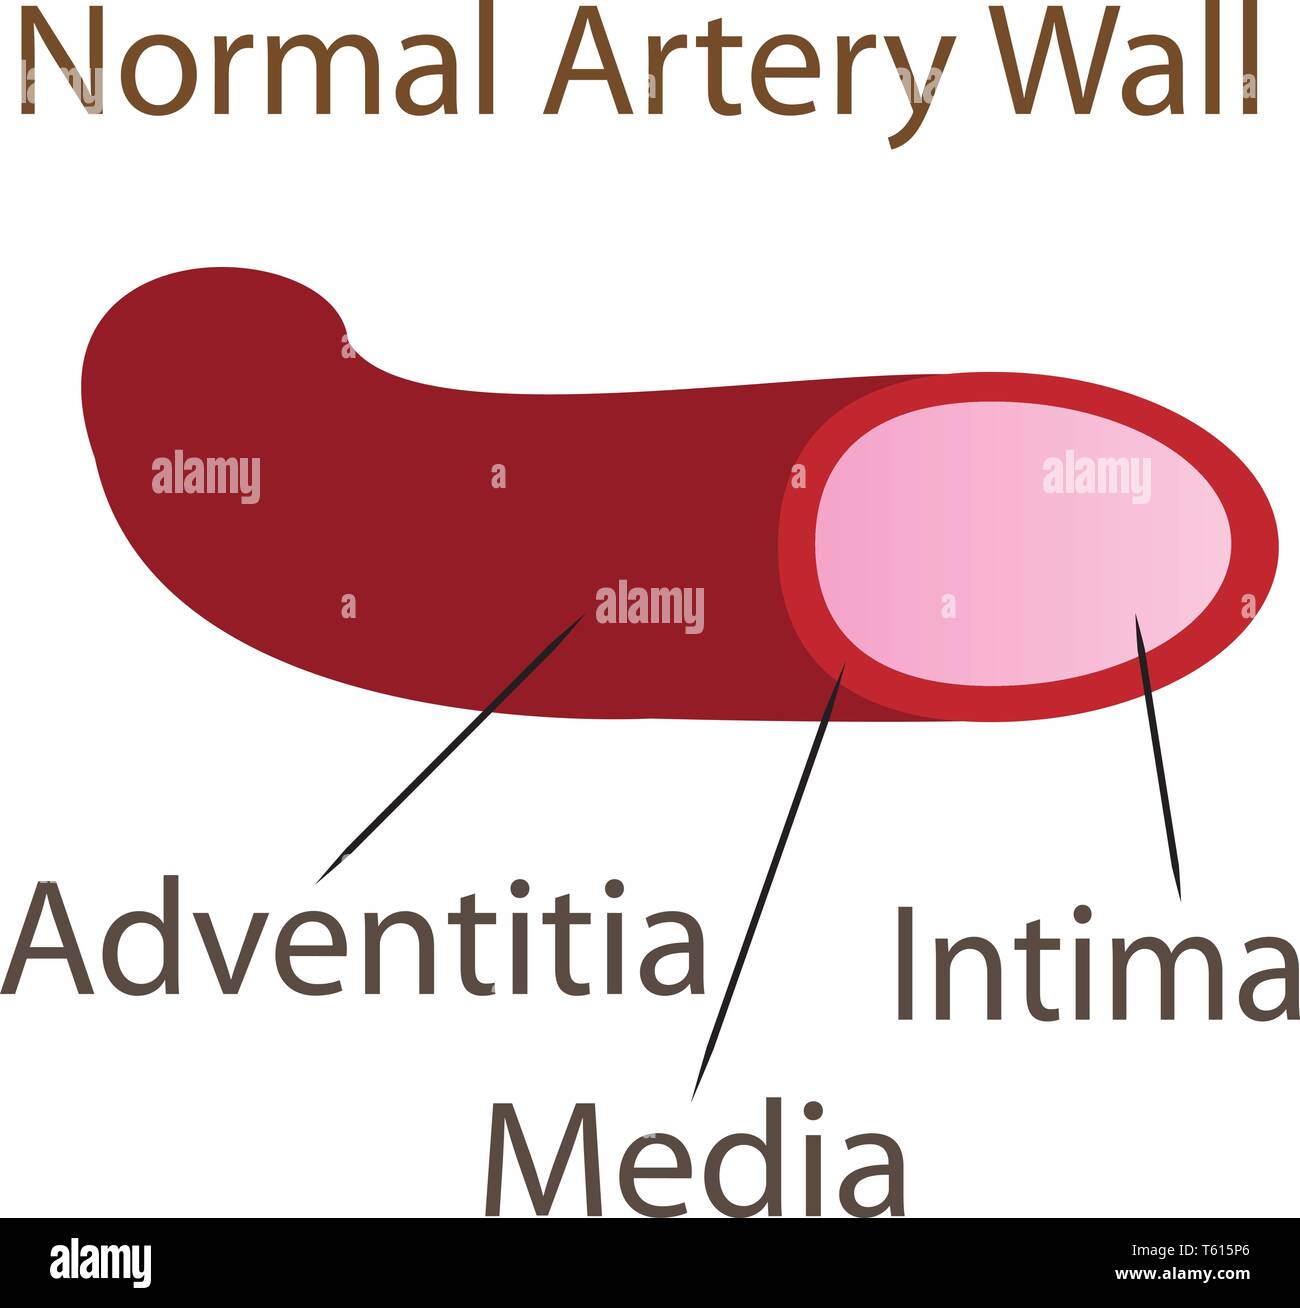 Normal artery wall anatomy medical vector illustration Stock Vector